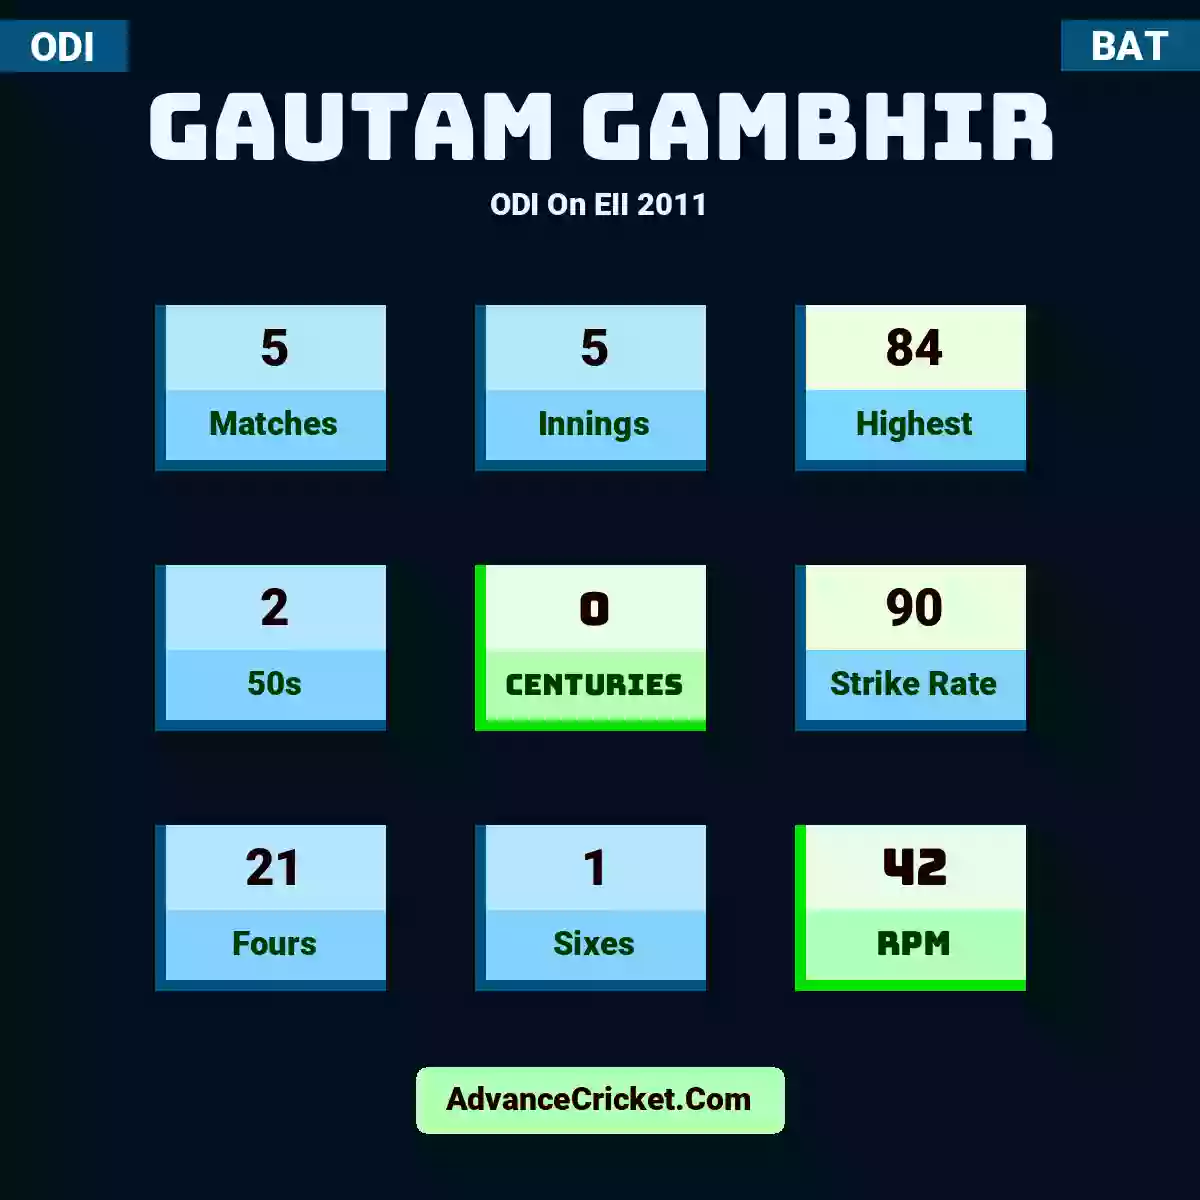 Gautam Gambhir ODI  On EII 2011, Gautam Gambhir played 5 matches, scored 84 runs as highest, 2 half-centuries, and 0 centuries, with a strike rate of 90. G.Gambhir hit 21 fours and 1 sixes, with an RPM of 42.